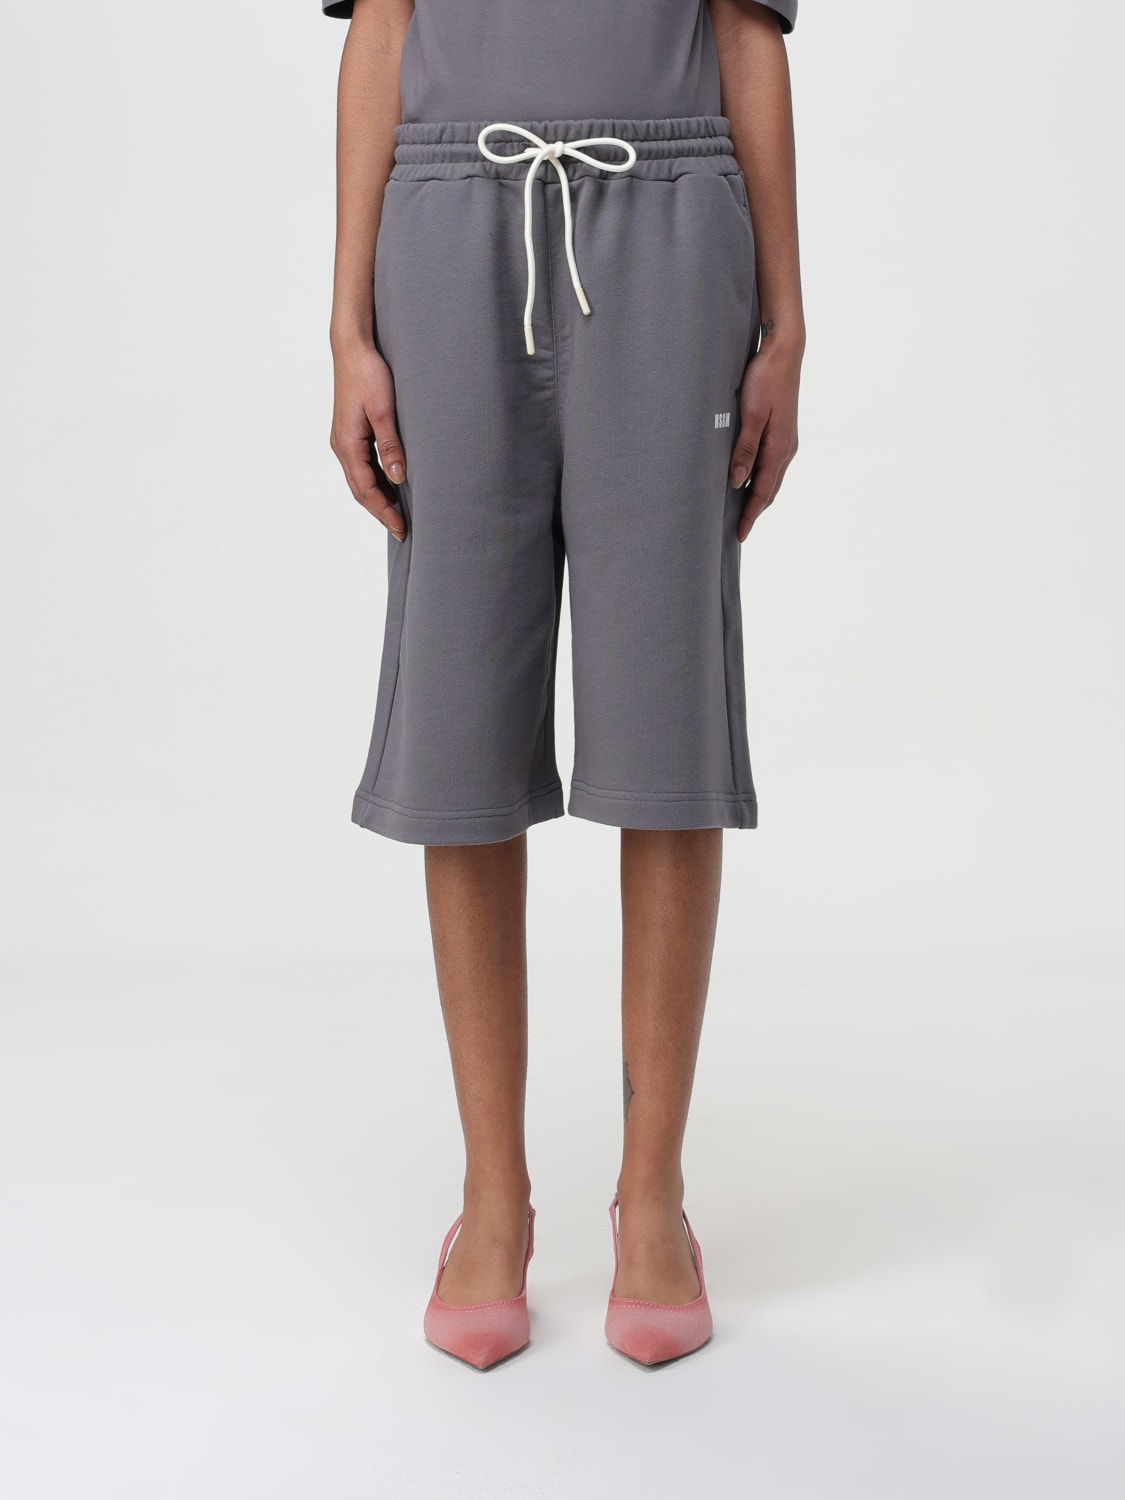 Grey Short for Women